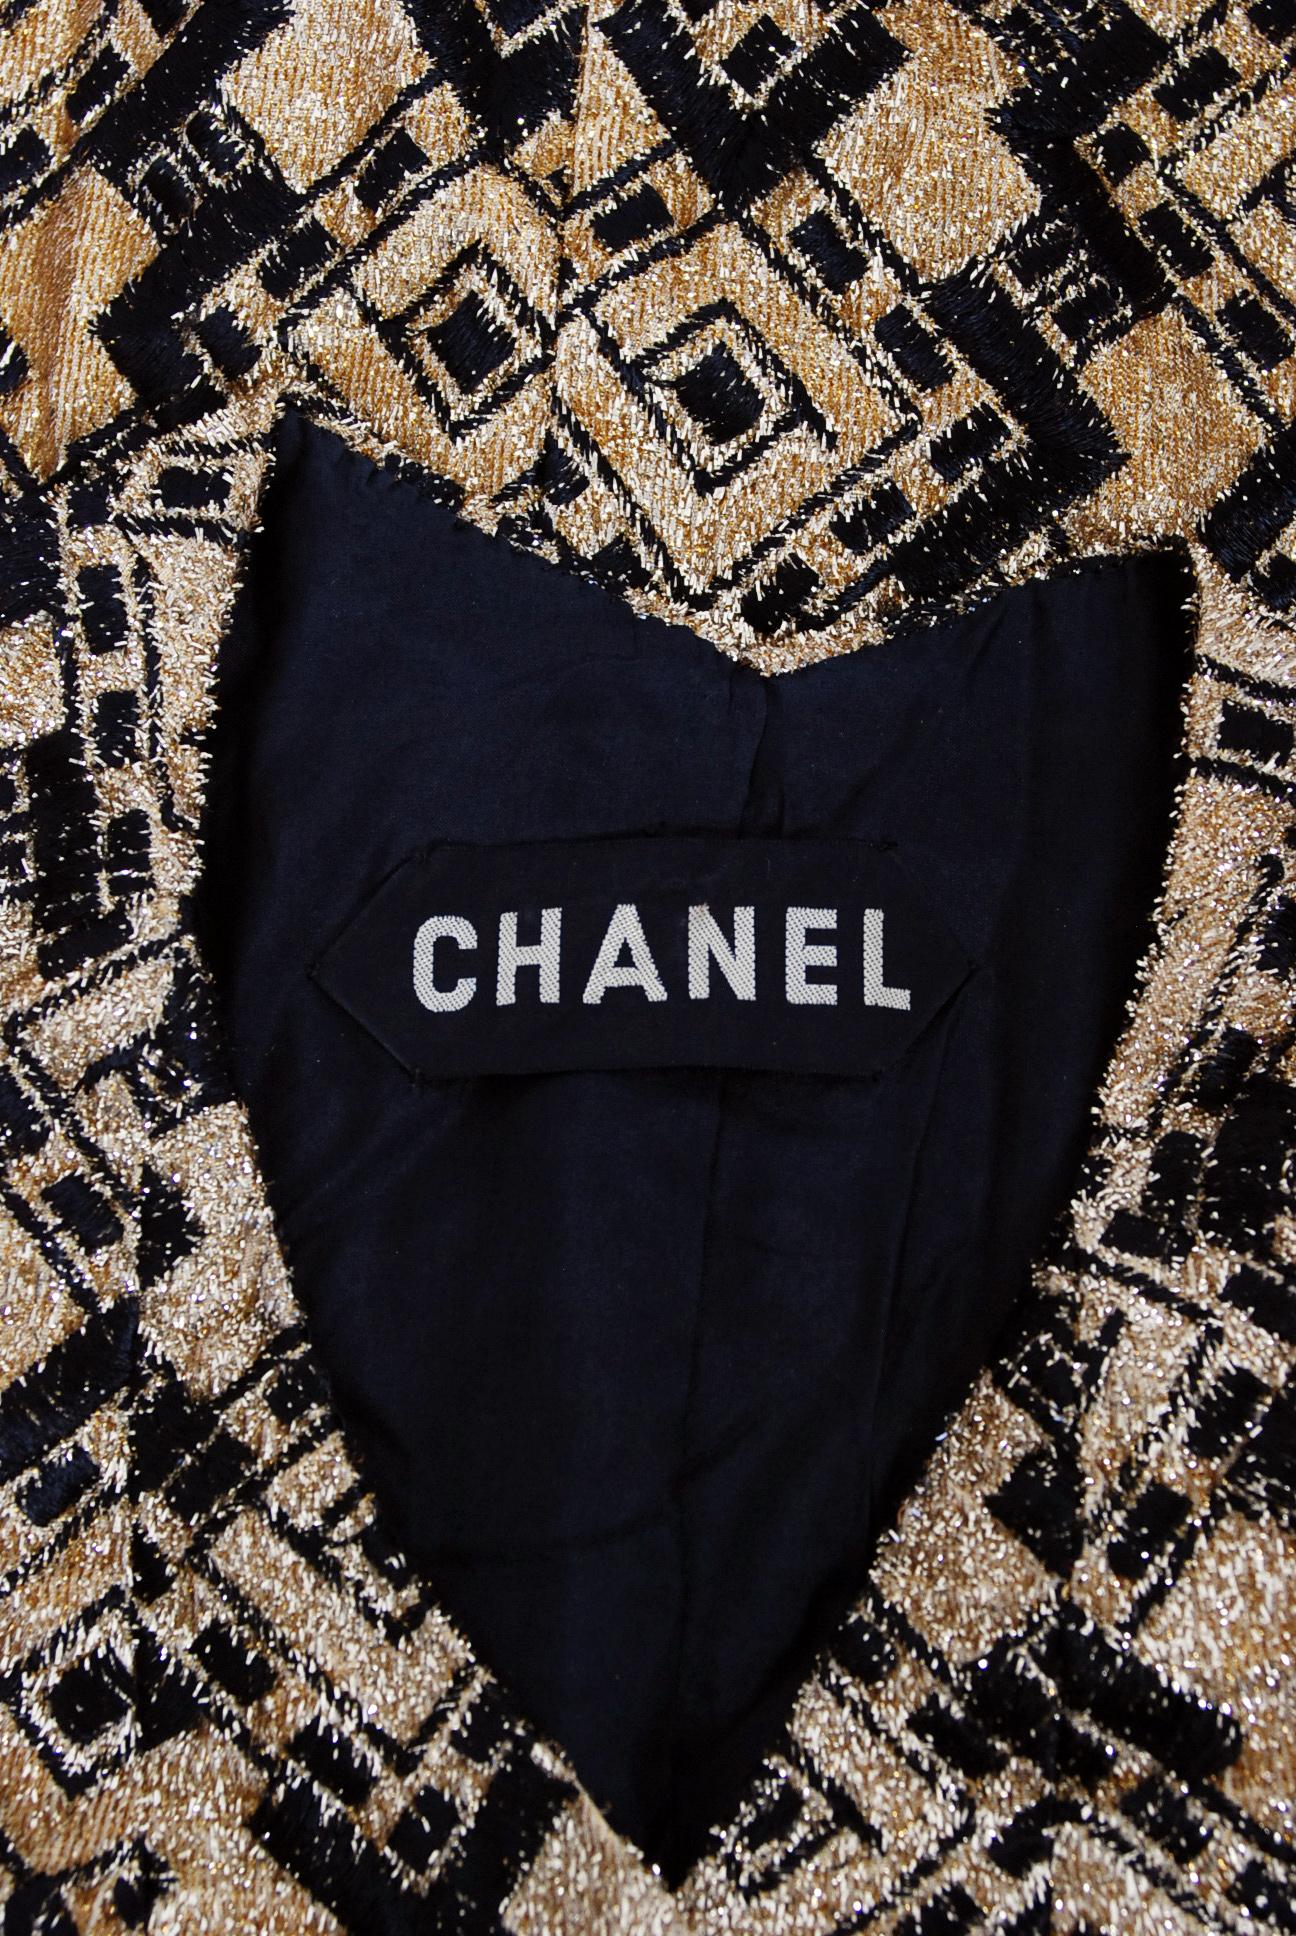 1970 Chanel Haute-Couture Metallic Gold & Black Deco Graphic Silk Dress Ensemble 4